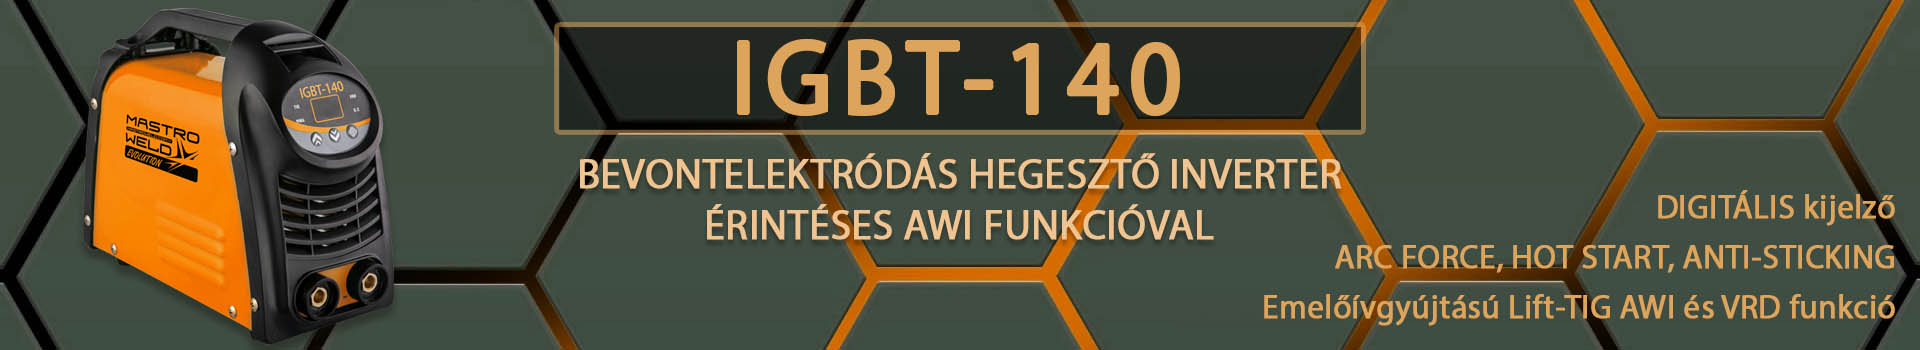 IGBT-140